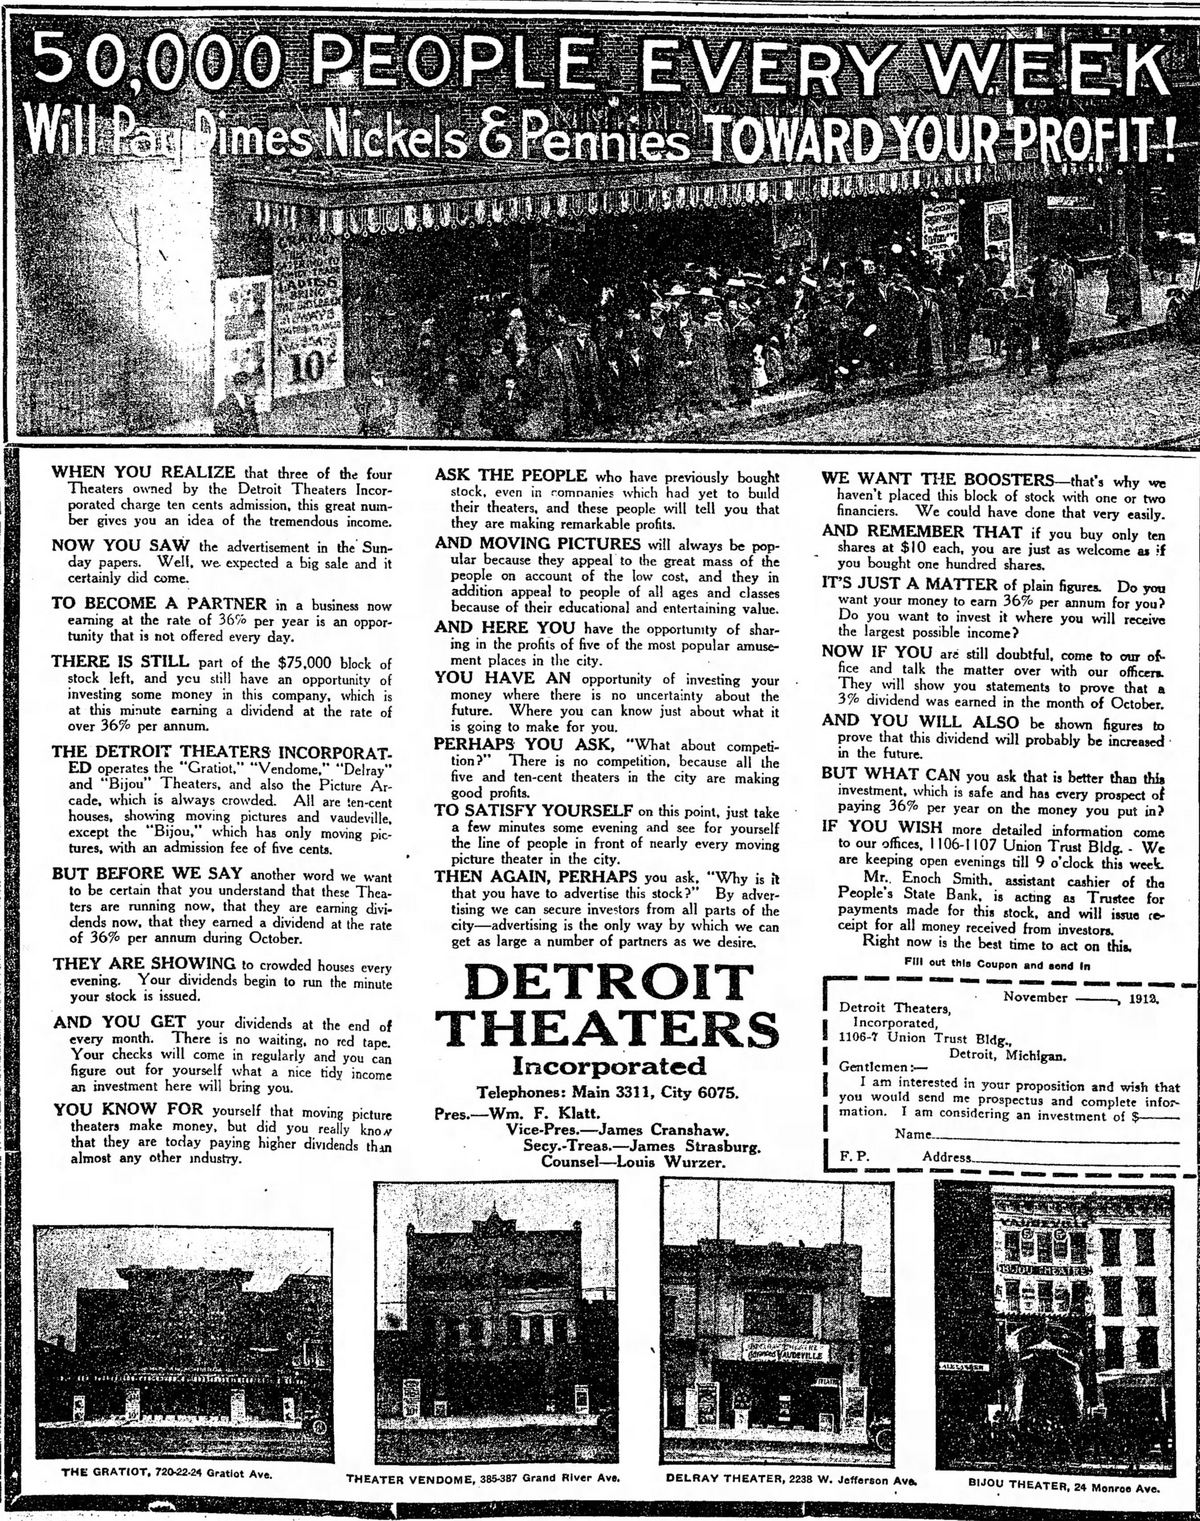 Bijou Theatre - November 1912 Ad (newer photo)